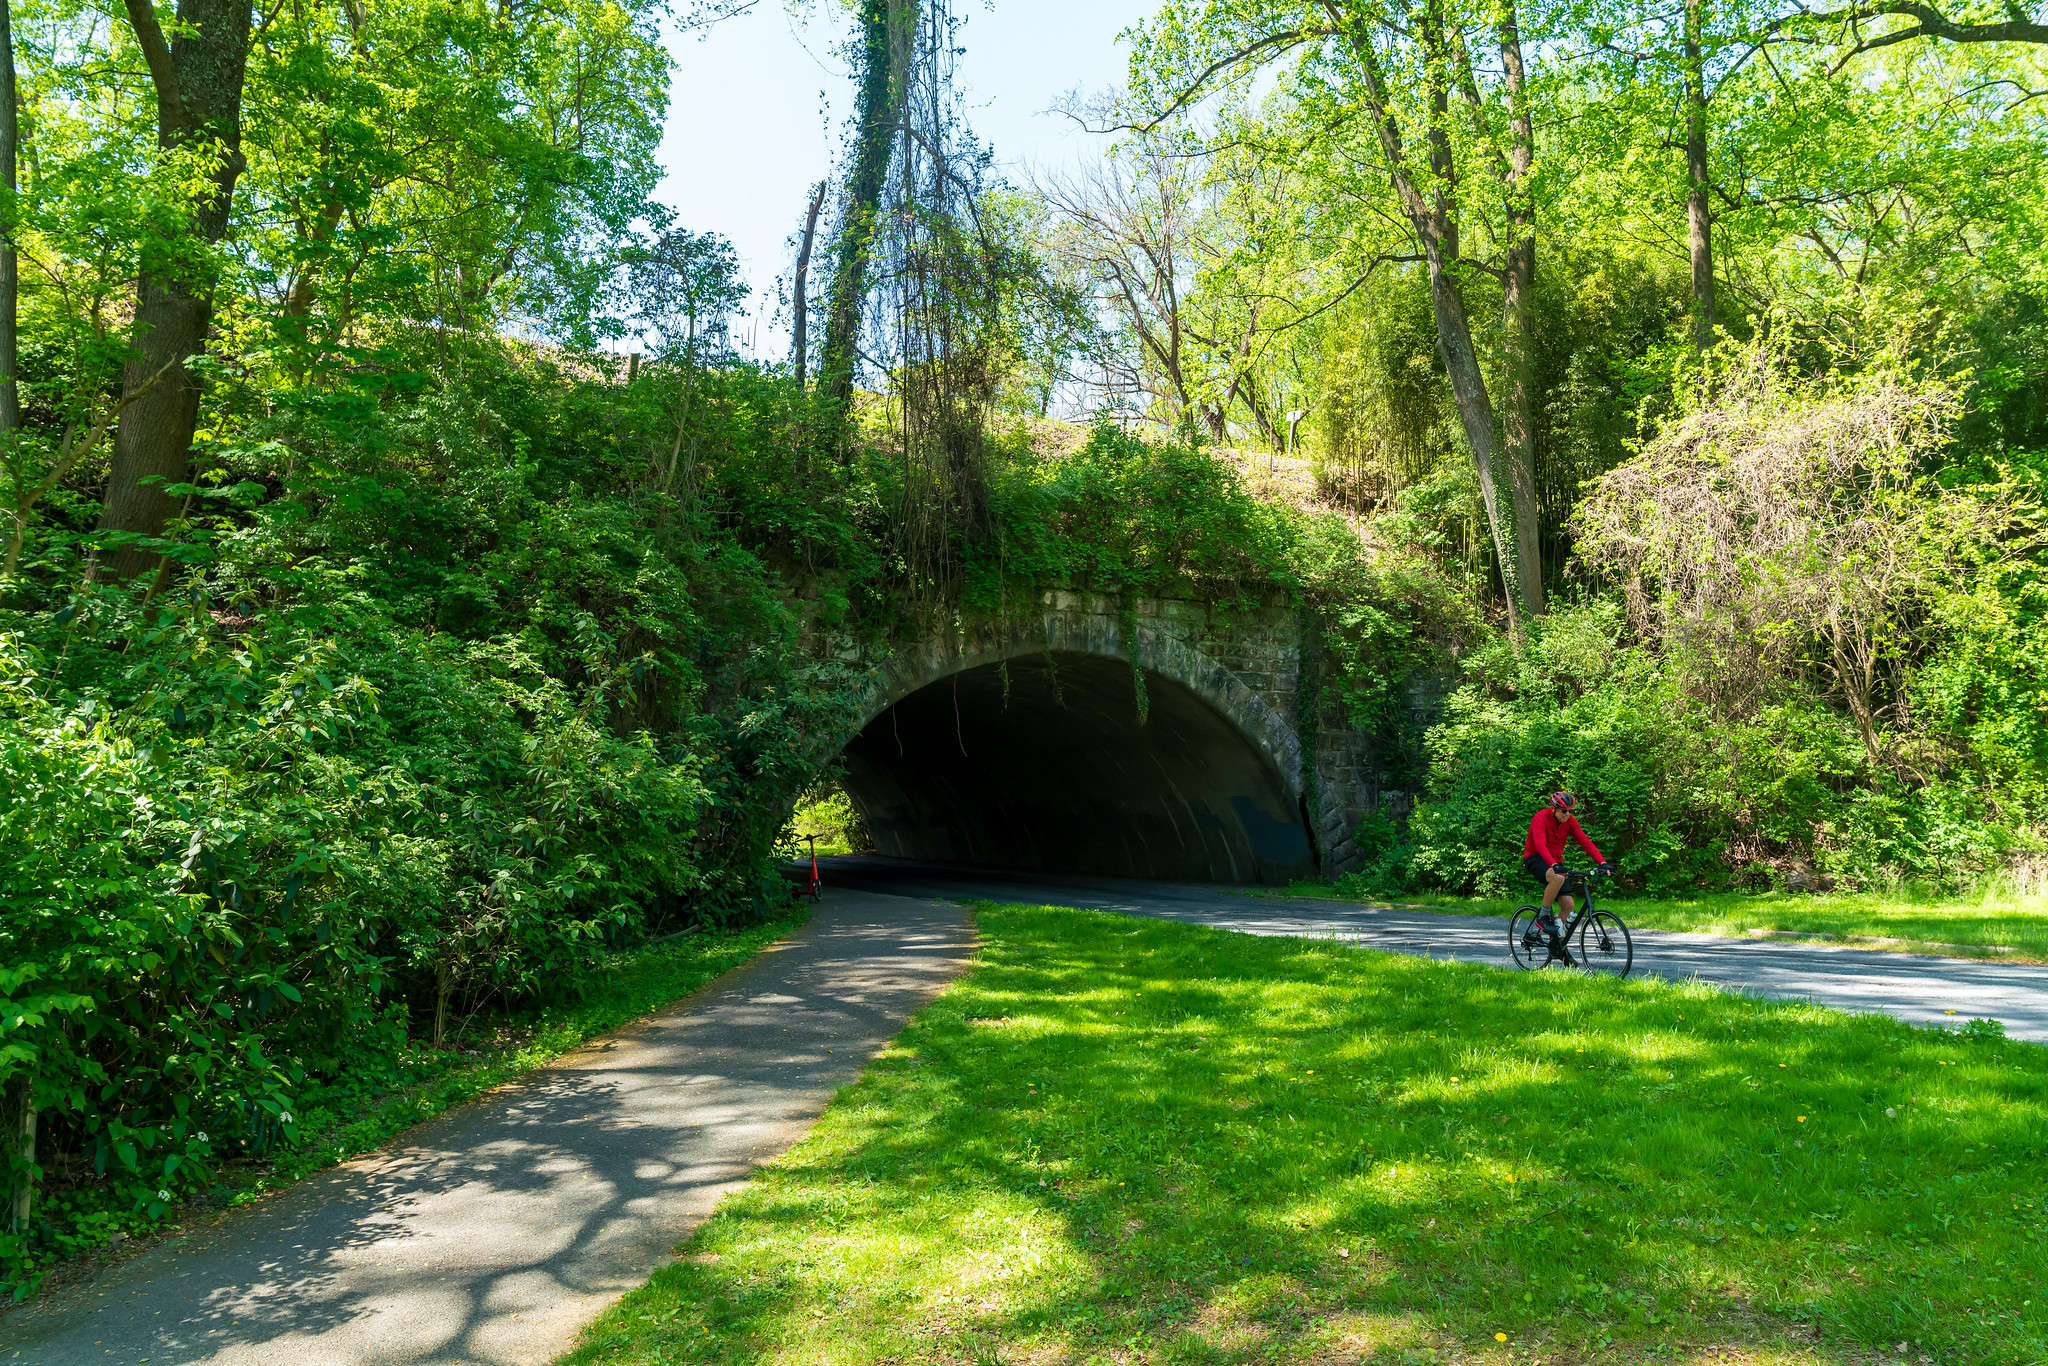 Biker on trail with stone bridge tunnel in the background at Ken-Gar Palisades Local Park